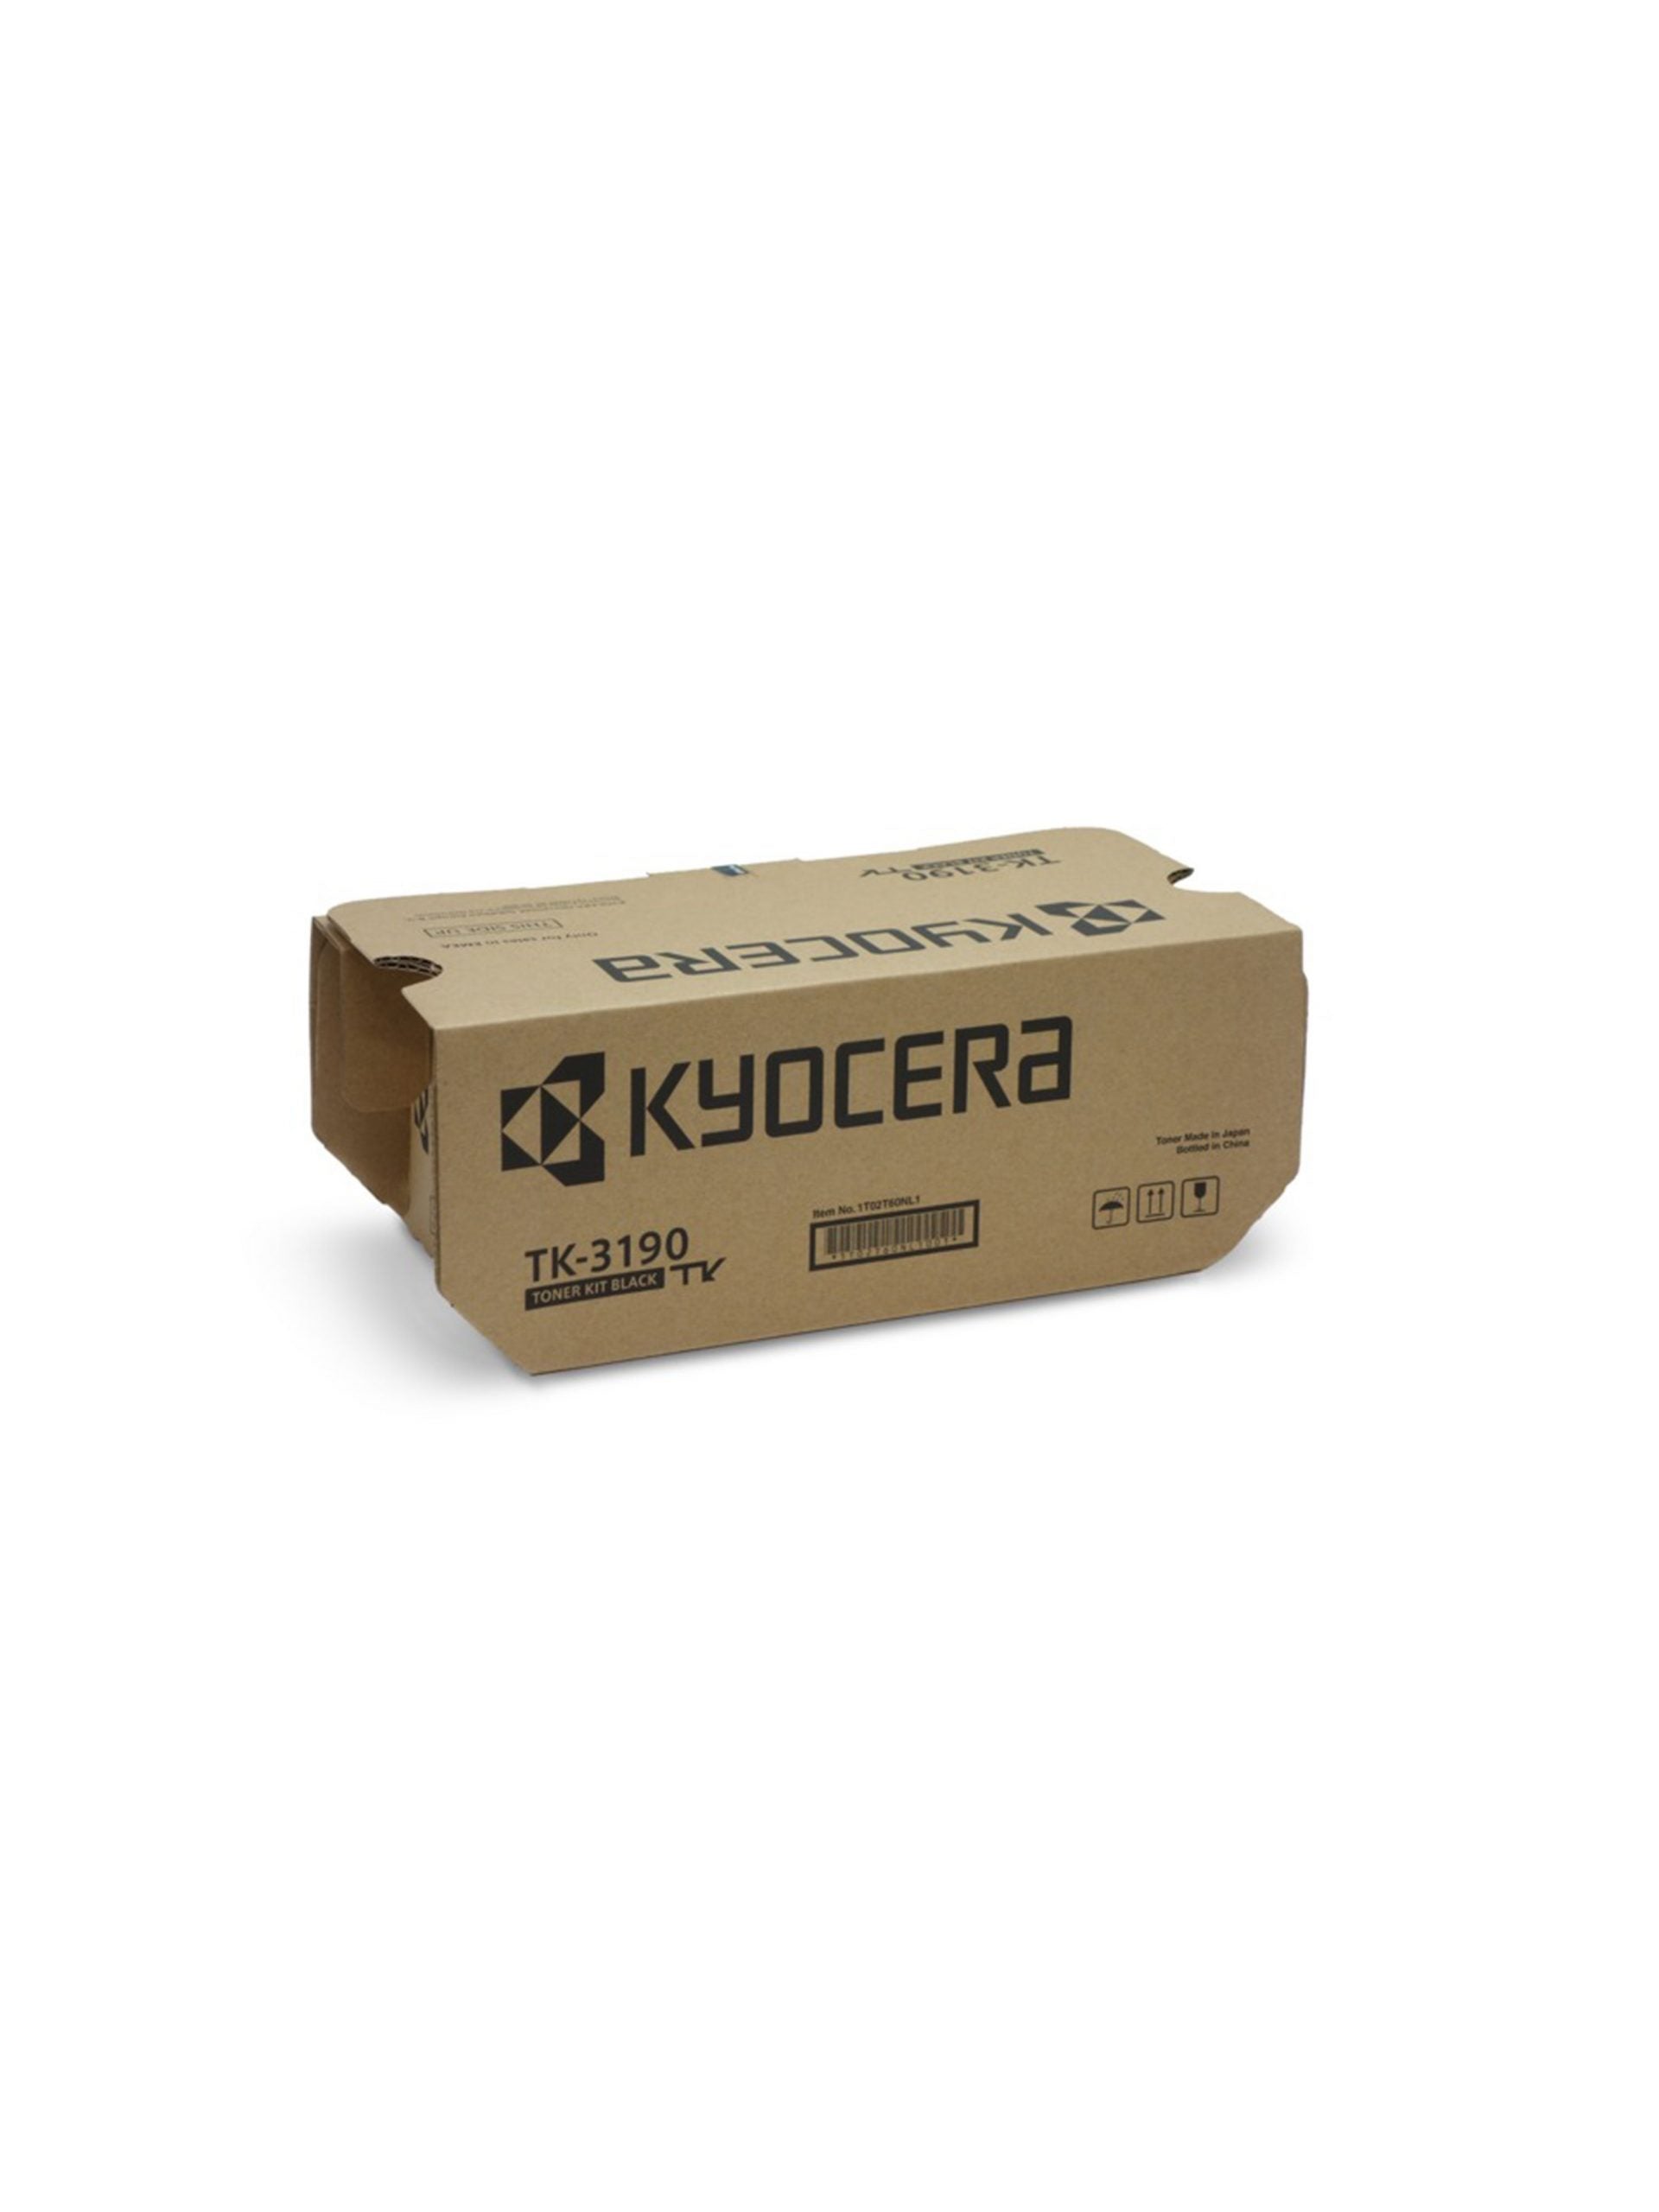 Kyocera Toner Tk3190 Black